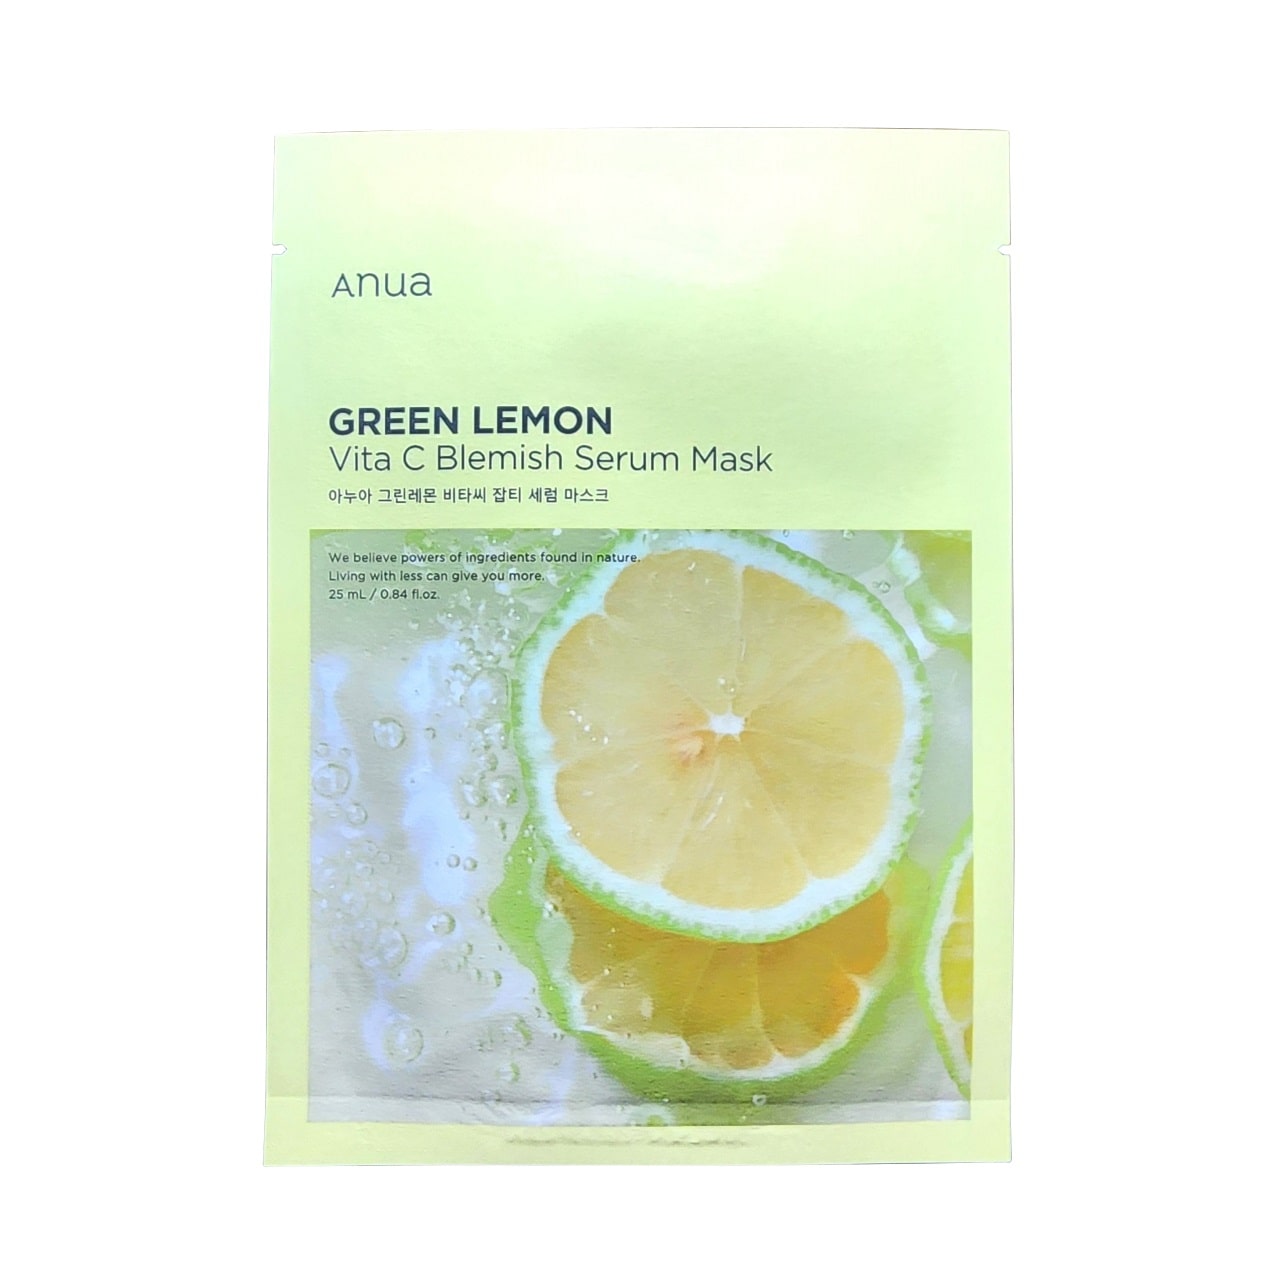 Product label for Anua Green Lemon Vita C Blemish Serum Mask (1 sheet)